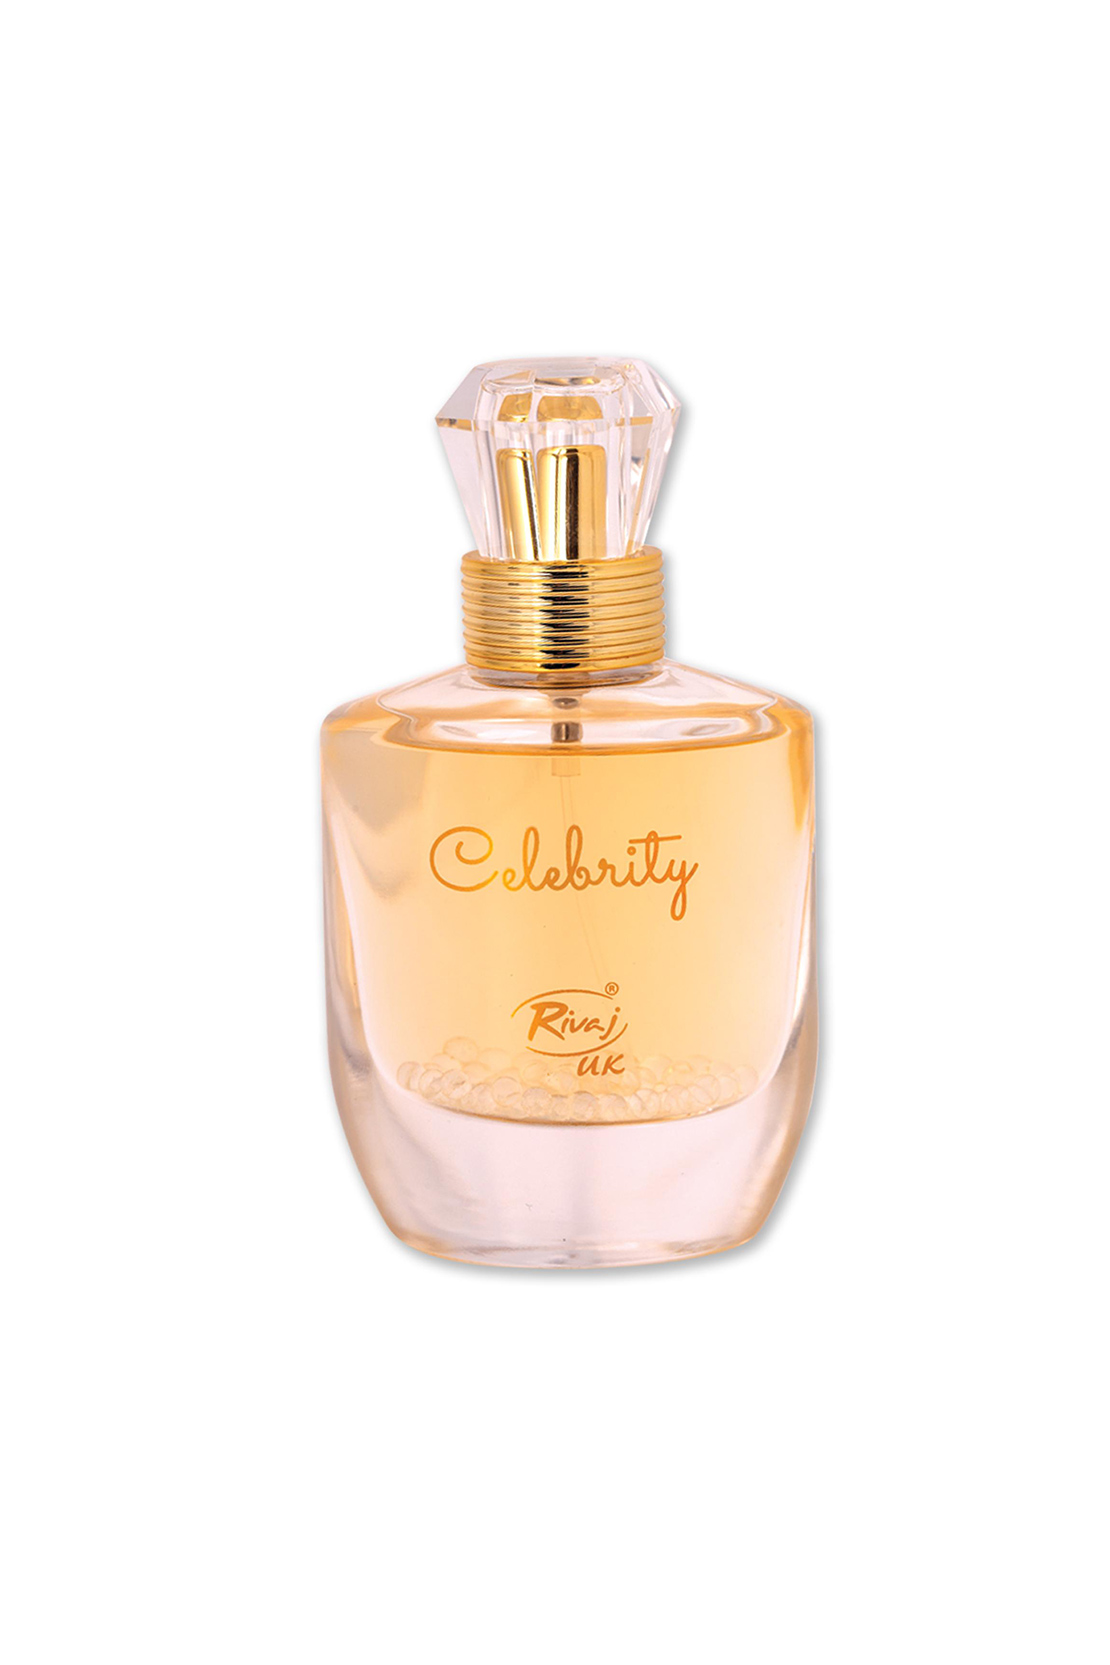 Celebrity Perfume - Women